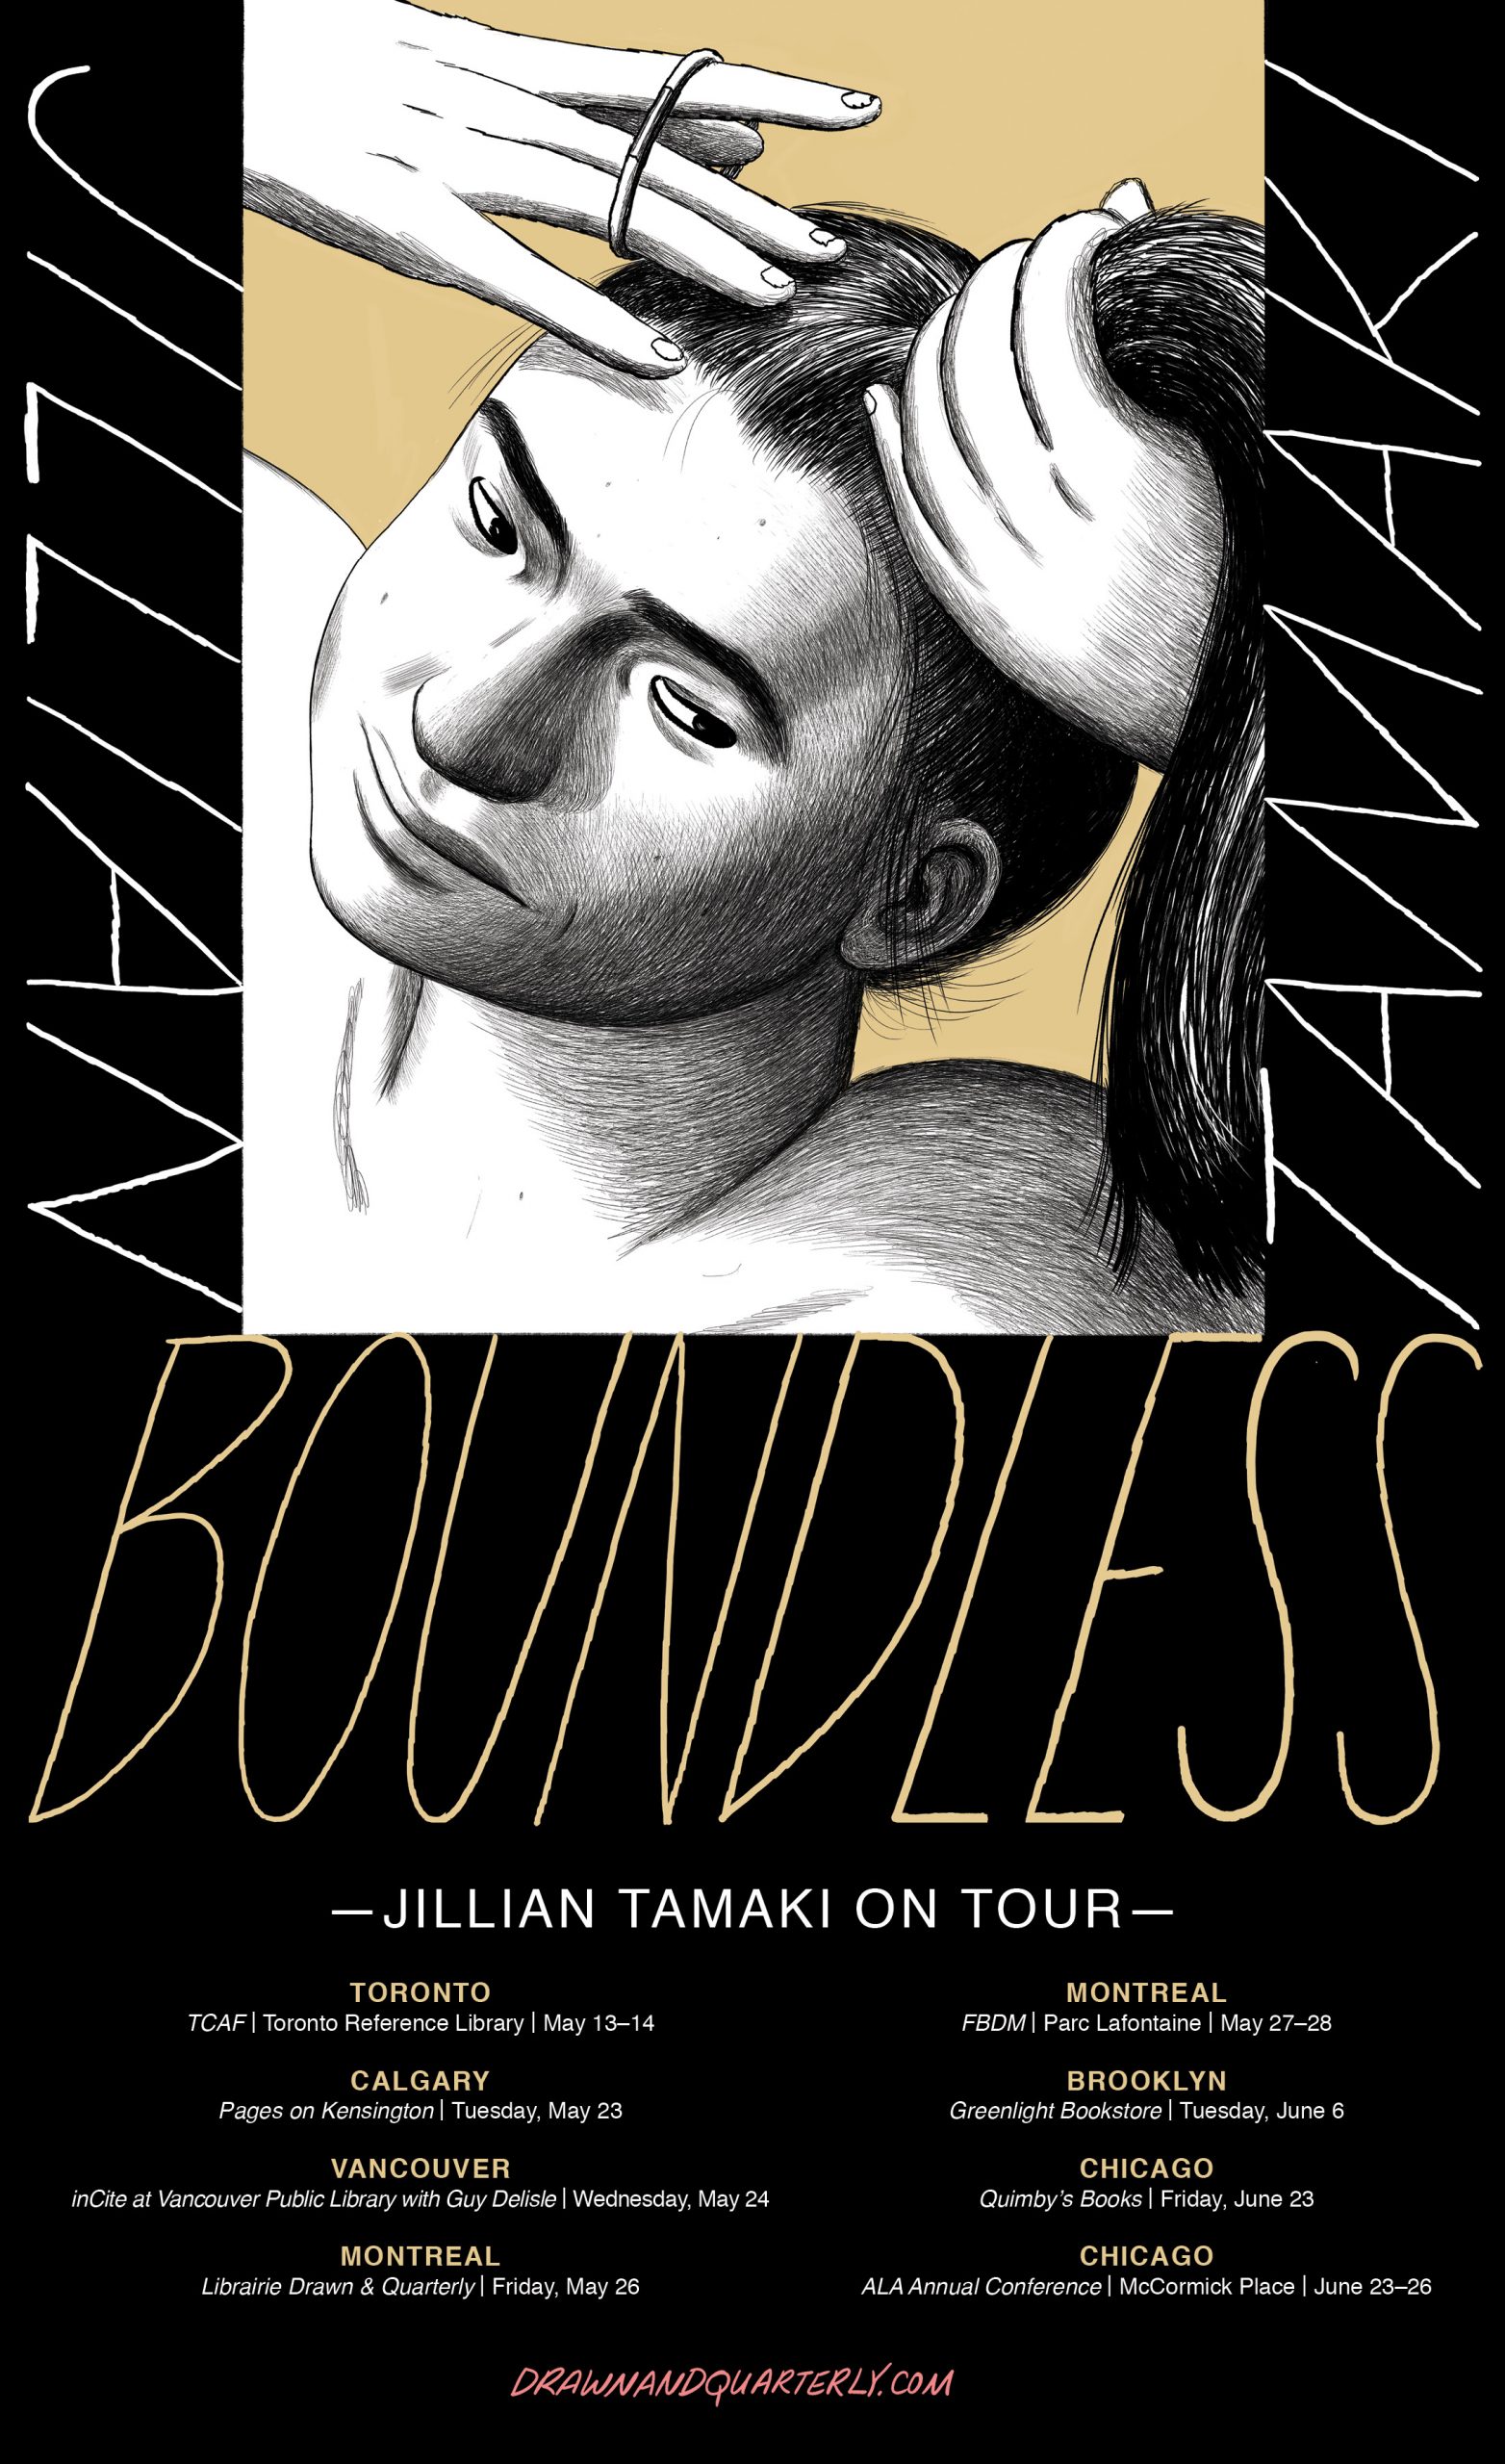 boundless